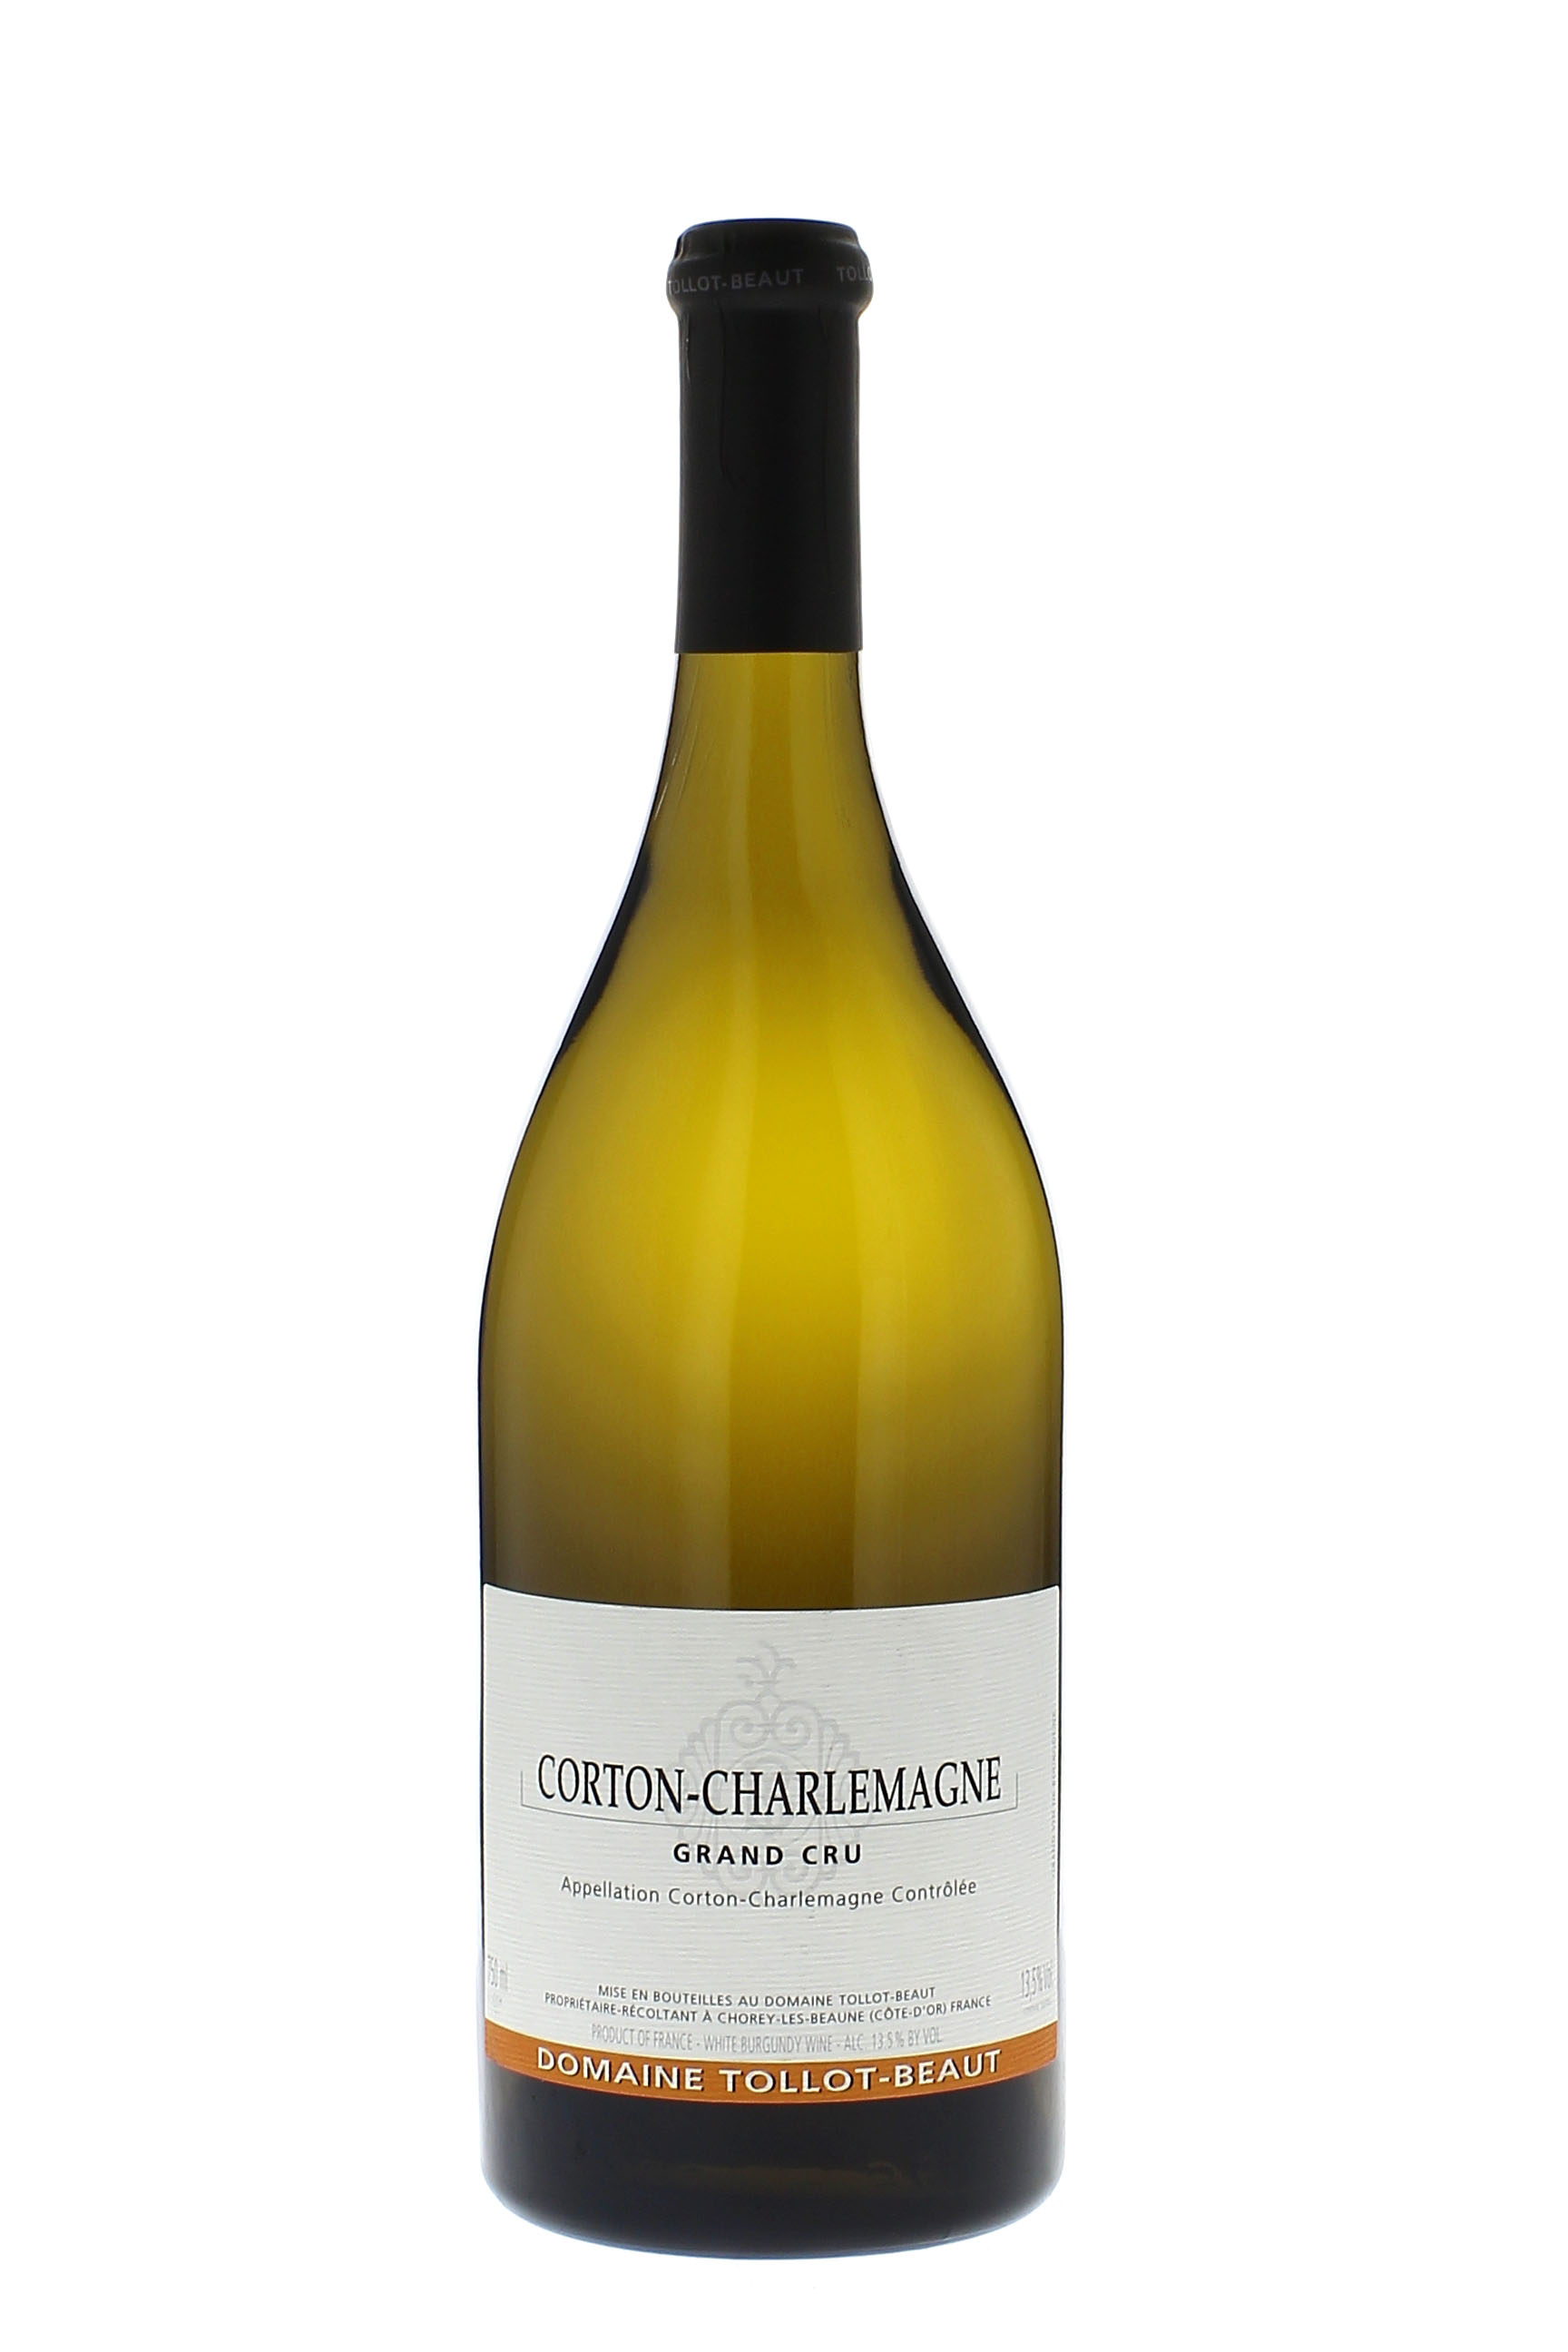 Corton charlemagne 2016 Domaine TOLLOT BEAUT, Bourgogne blanc